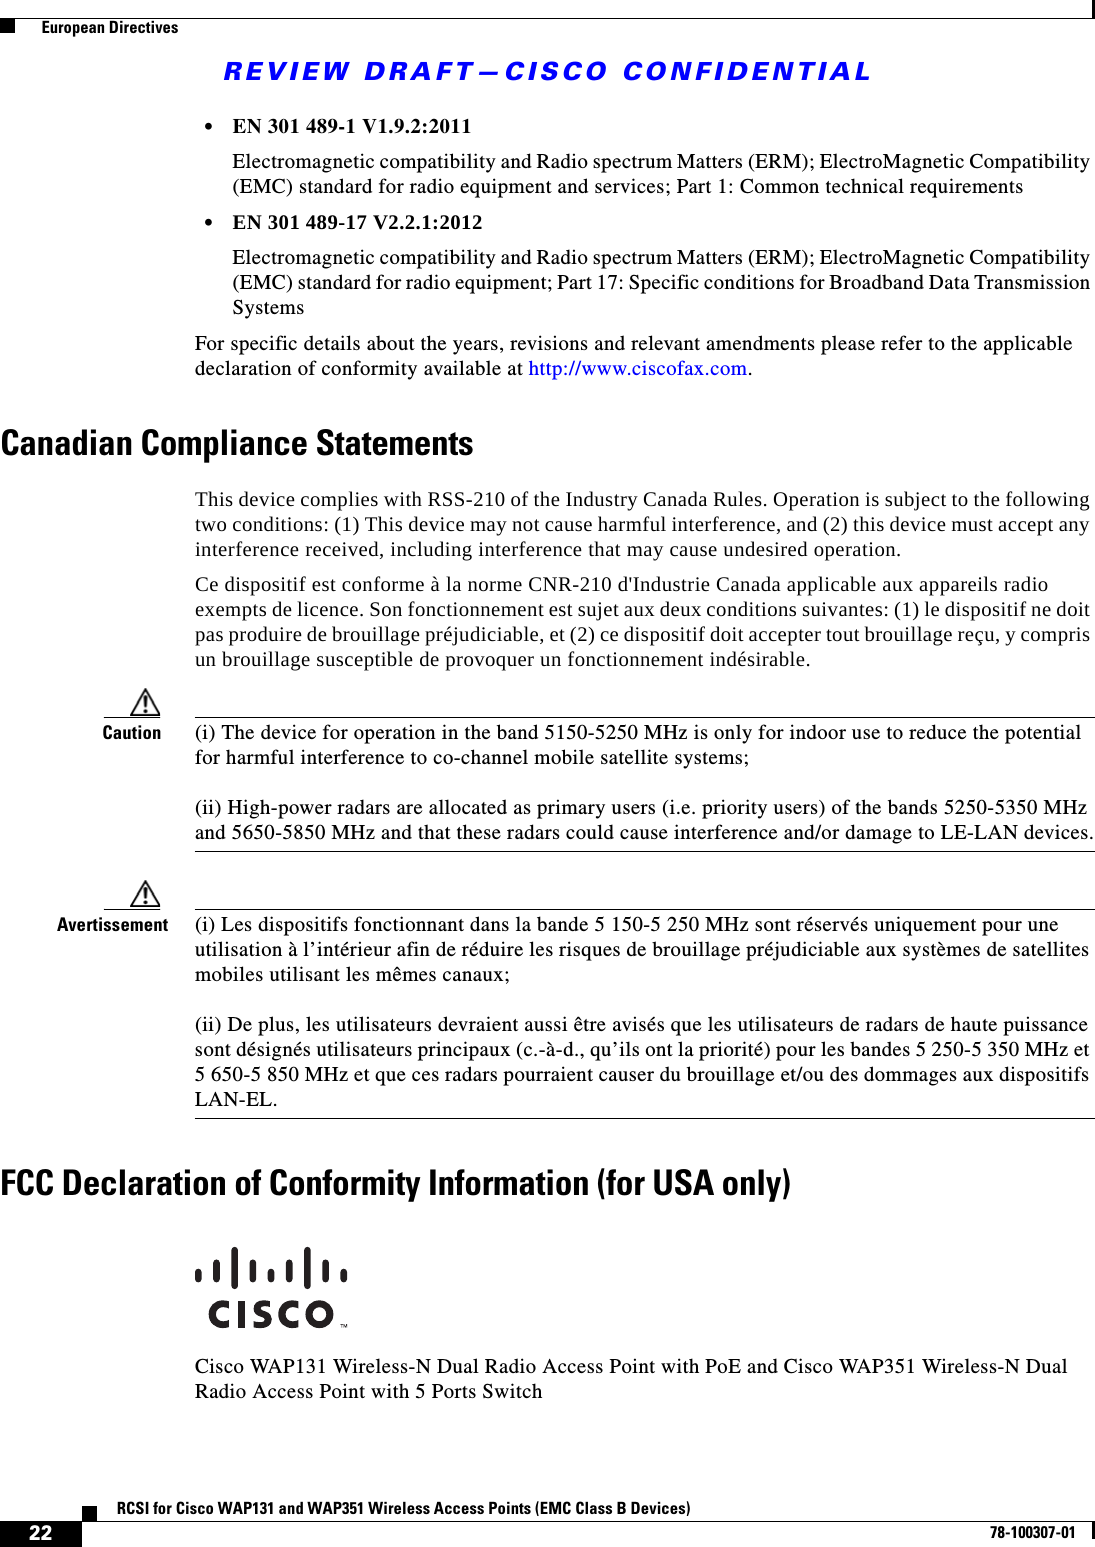 REVIEW DRAFT—CISCO CONFIDENTIAL22RCSI for Cisco WAP131 and WAP351 Wireless Access Points (EMC Class B Devices)78-100307-01  European Directives•EN 301 489-1 V1.9.2:2011Electromagnetic compatibility and Radio spectrum Matters (ERM); ElectroMagnetic Compatibility (EMC) standard for radio equipment and services; Part 1: Common technical requirements•EN 301 489-17 V2.2.1:2012Electromagnetic compatibility and Radio spectrum Matters (ERM); ElectroMagnetic Compatibility (EMC) standard for radio equipment; Part 17: Specific conditions for Broadband Data Transmission SystemsFor specific details about the years, revisions and relevant amendments please refer to the applicable declaration of conformity available at http://www.ciscofax.com.Canadian Compliance StatementsThis device complies with RSS-210 of the Industry Canada Rules. Operation is subject to the following two conditions: (1) This device may not cause harmful interference, and (2) this device must accept any interference received, including interference that may cause undesired operation. Ce dispositif est conforme à la norme CNR-210 d&apos;Industrie Canada applicable aux appareils radio exempts de licence. Son fonctionnement est sujet aux deux conditions suivantes: (1) le dispositif ne doit pas produire de brouillage préjudiciable, et (2) ce dispositif doit accepter tout brouillage reçu, y compris un brouillage susceptible de provoquer un fonctionnement indésirable.Caution (i) The device for operation in the band 5150-5250 MHz is only for indoor use to reduce the potential for harmful interference to co-channel mobile satellite systems;(ii) High-power radars are allocated as primary users (i.e. priority users) of the bands 5250-5350 MHz and 5650-5850 MHz and that these radars could cause interference and/or damage to LE-LAN devices.Avertissement  (i) Les dispositifs fonctionnant dans la bande 5 150-5 250 MHz sont réservés uniquement pour une utilisation à l’intérieur afin de réduire les risques de brouillage préjudiciable aux systèmes de satellites mobiles utilisant les mêmes canaux;(ii) De plus, les utilisateurs devraient aussi être avisés que les utilisateurs de radars de haute puissance sont désignés utilisateurs principaux (c.-à-d., qu’ils ont la priorité) pour les bandes 5 250-5 350 MHz et 5 650-5 850 MHz et que ces radars pourraient causer du brouillage et/ou des dommages aux dispositifs LAN-EL.FCC Declaration of Conformity Information (for USA only)Cisco WAP131 Wireless-N Dual Radio Access Point with PoE and Cisco WAP351 Wireless-N Dual Radio Access Point with 5 Ports Switch